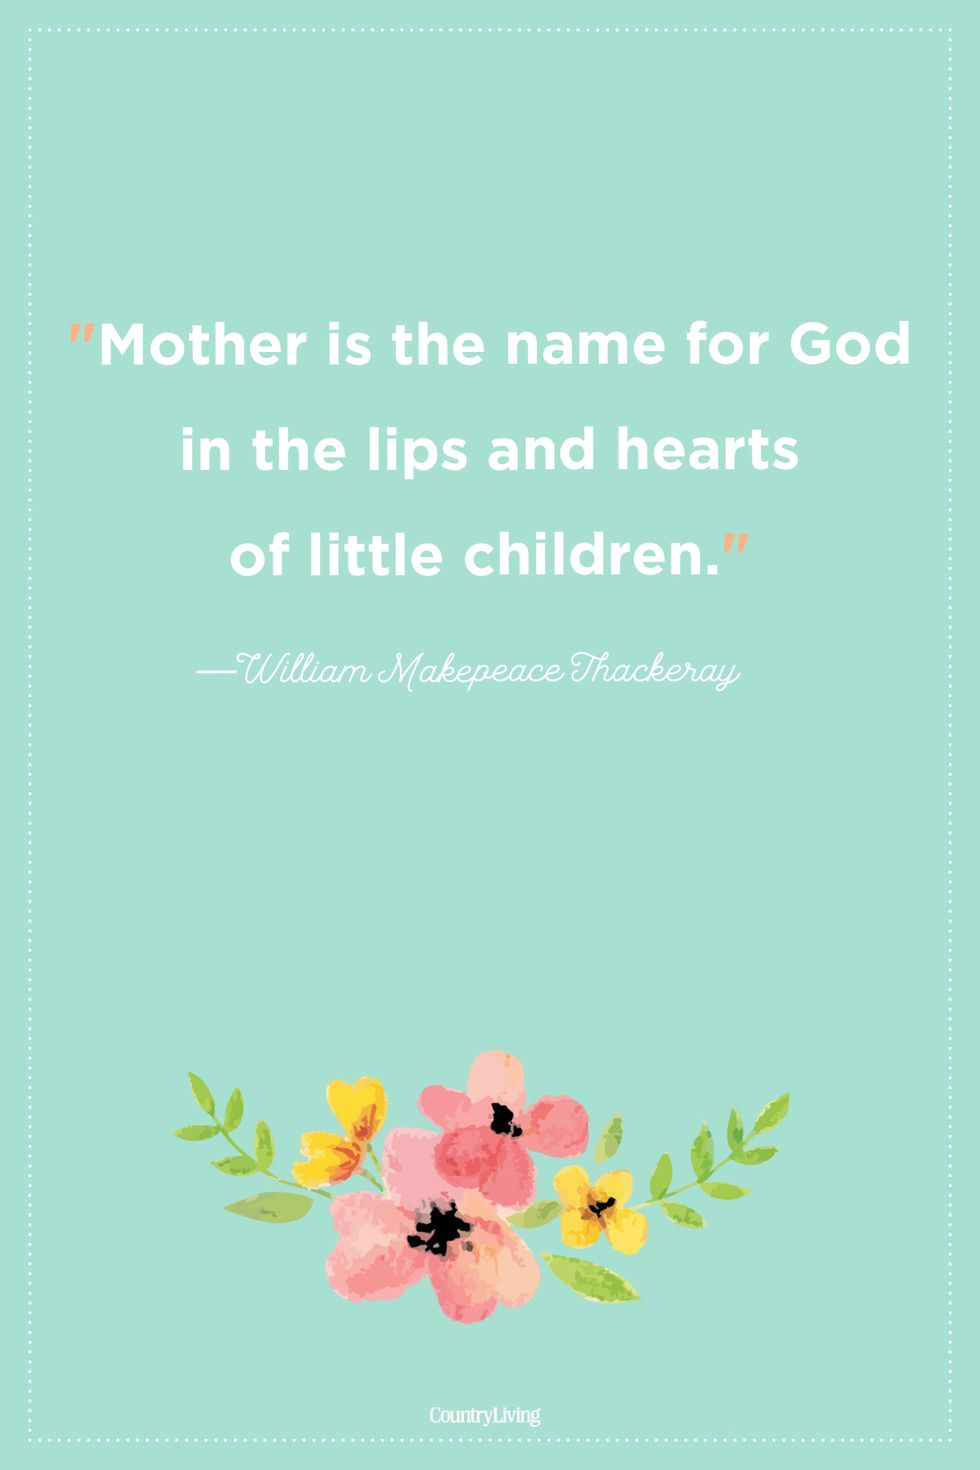 motherhood quotes mom William Makepeace Thackeray